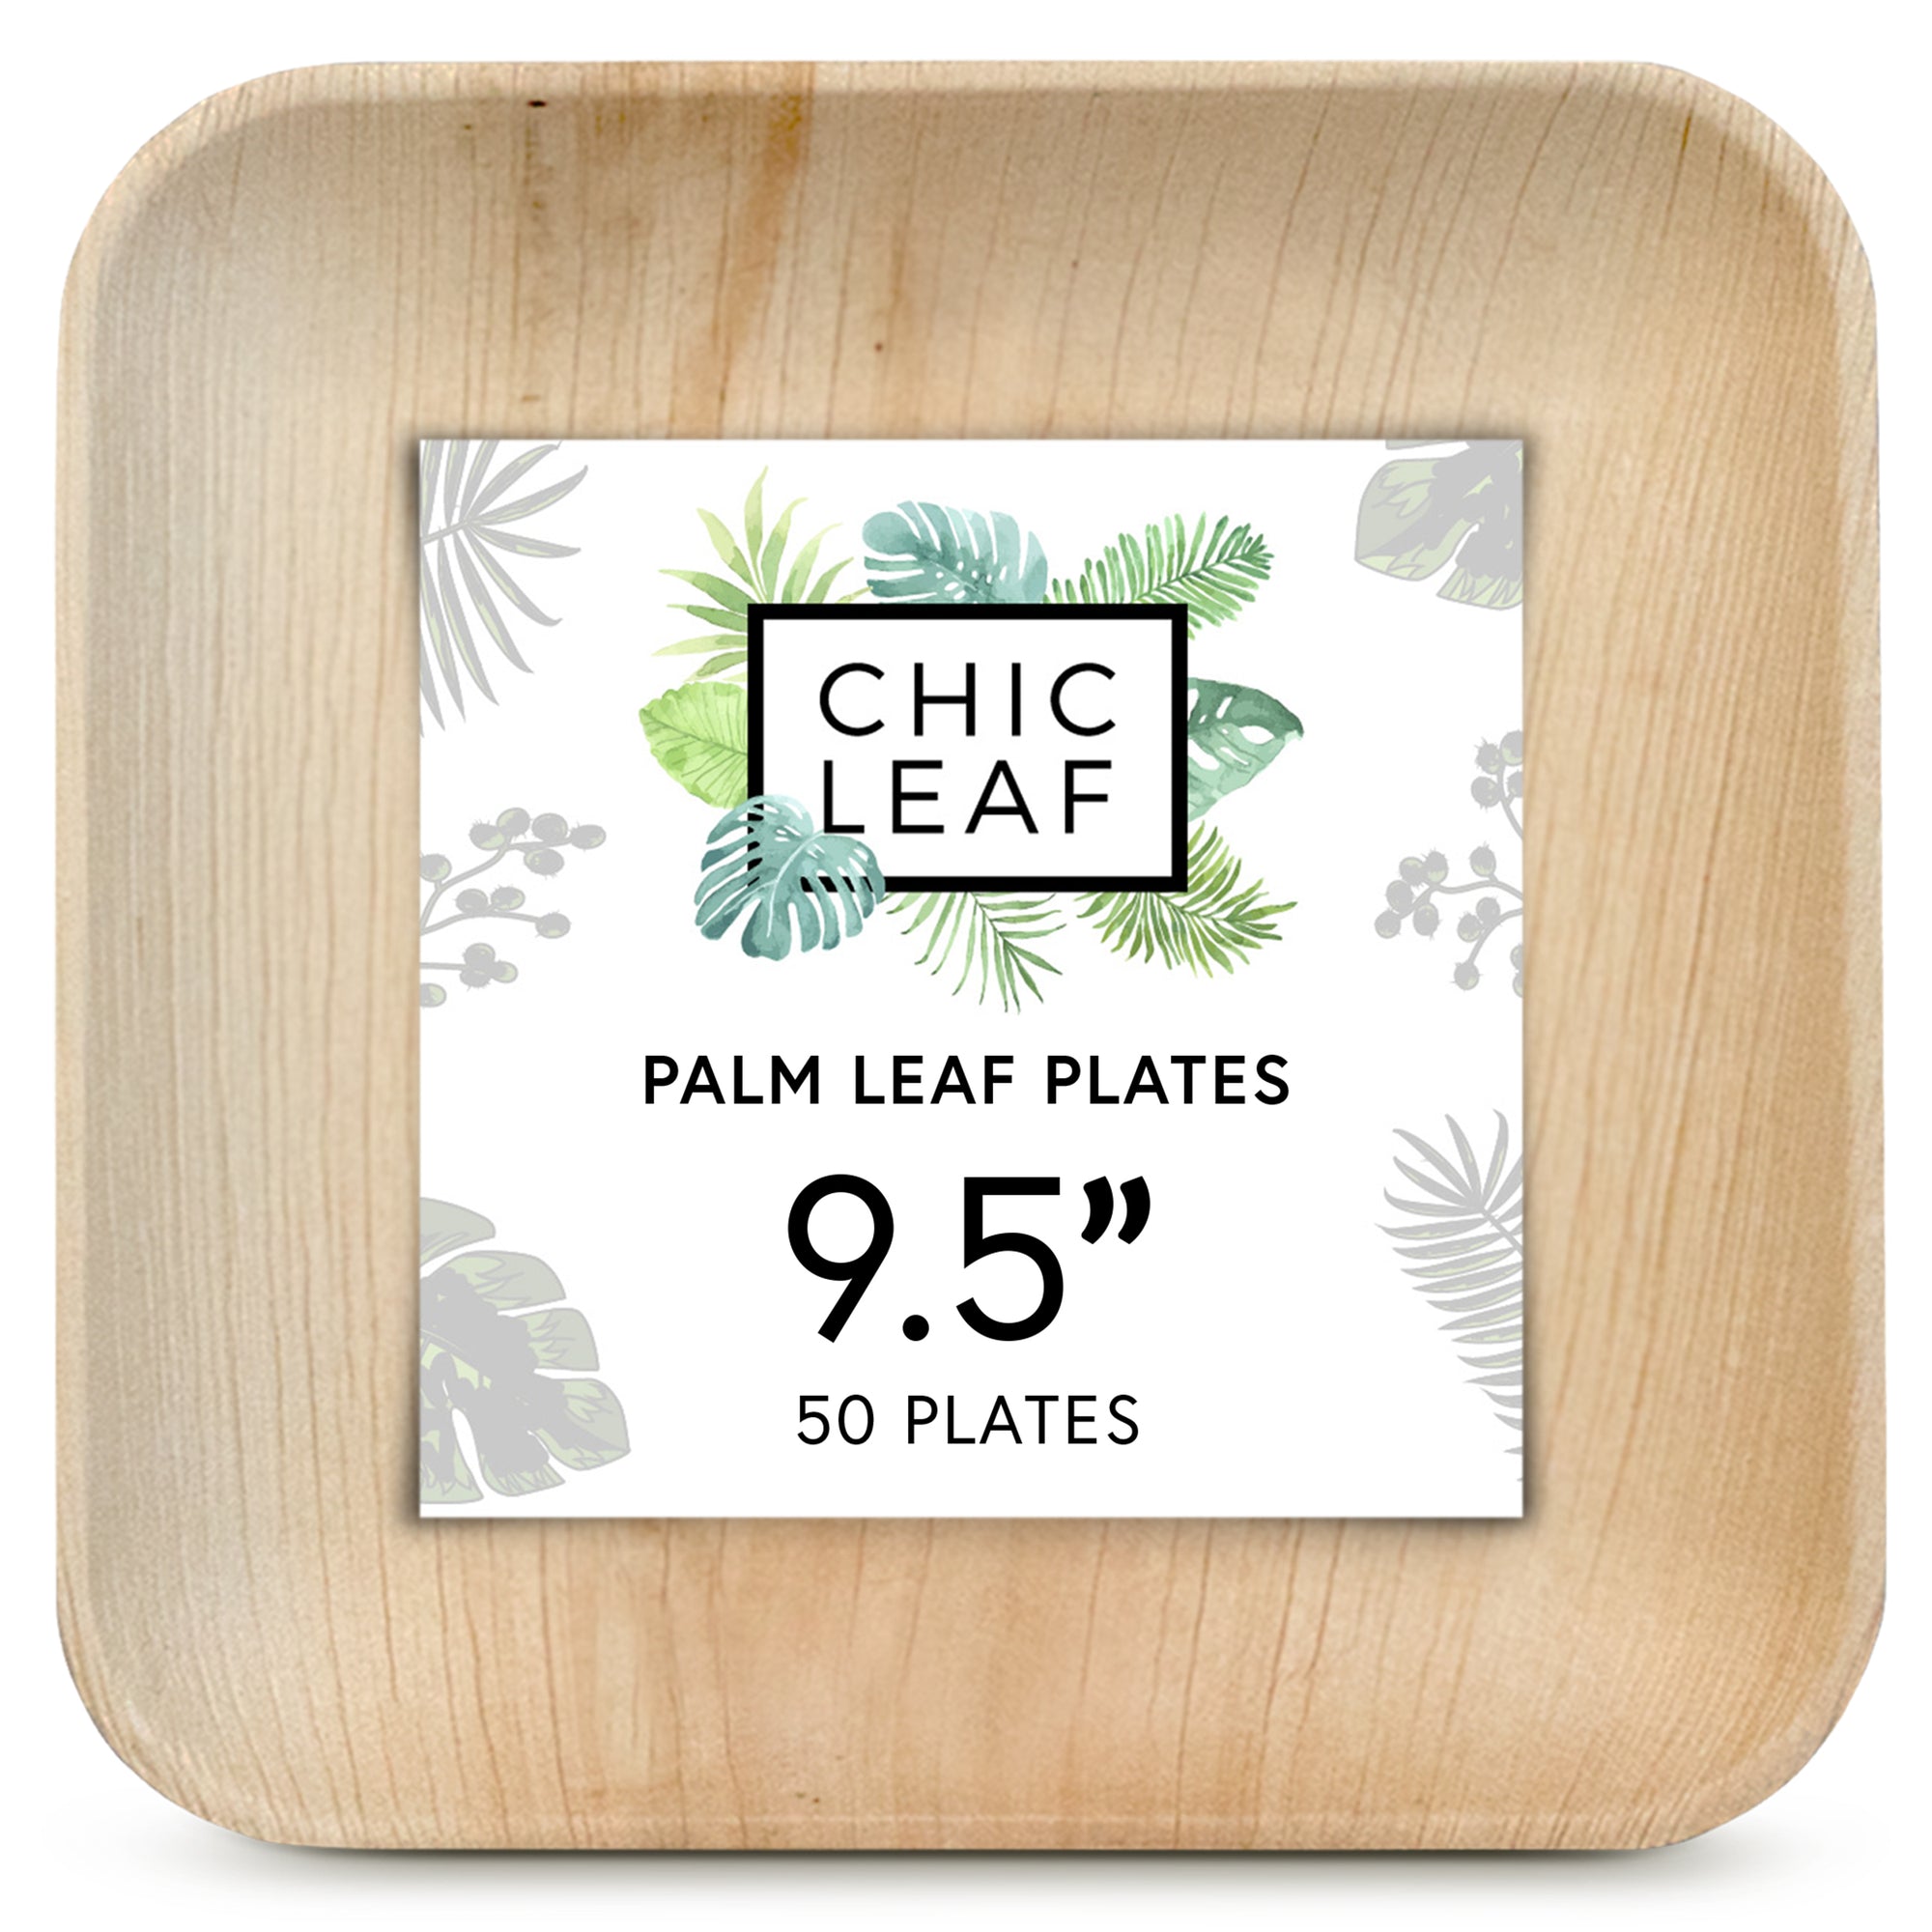 9.5" Palm Leaf Plates